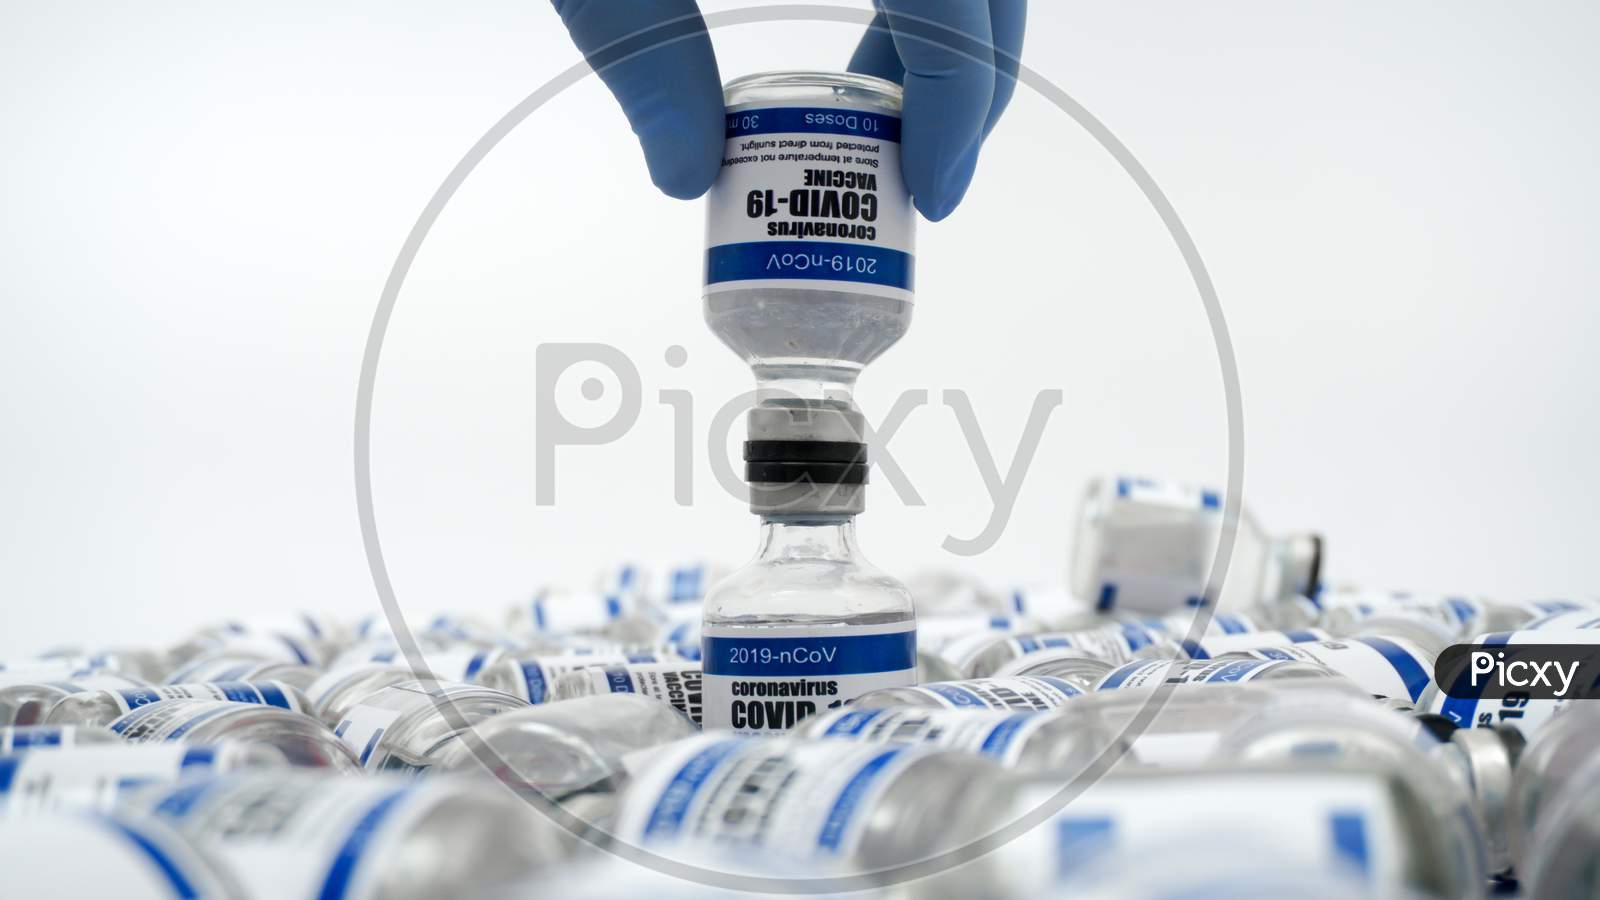 Covid-19 Corona Virus 2019-Ncov Vaccine Vials Medicine Drug Bottles Syringe Injection Blue Nitrile Surgical Gloves. Vaccination, Immunization, Treatment To Cure Covid 19 Corona Virus Infection Concept